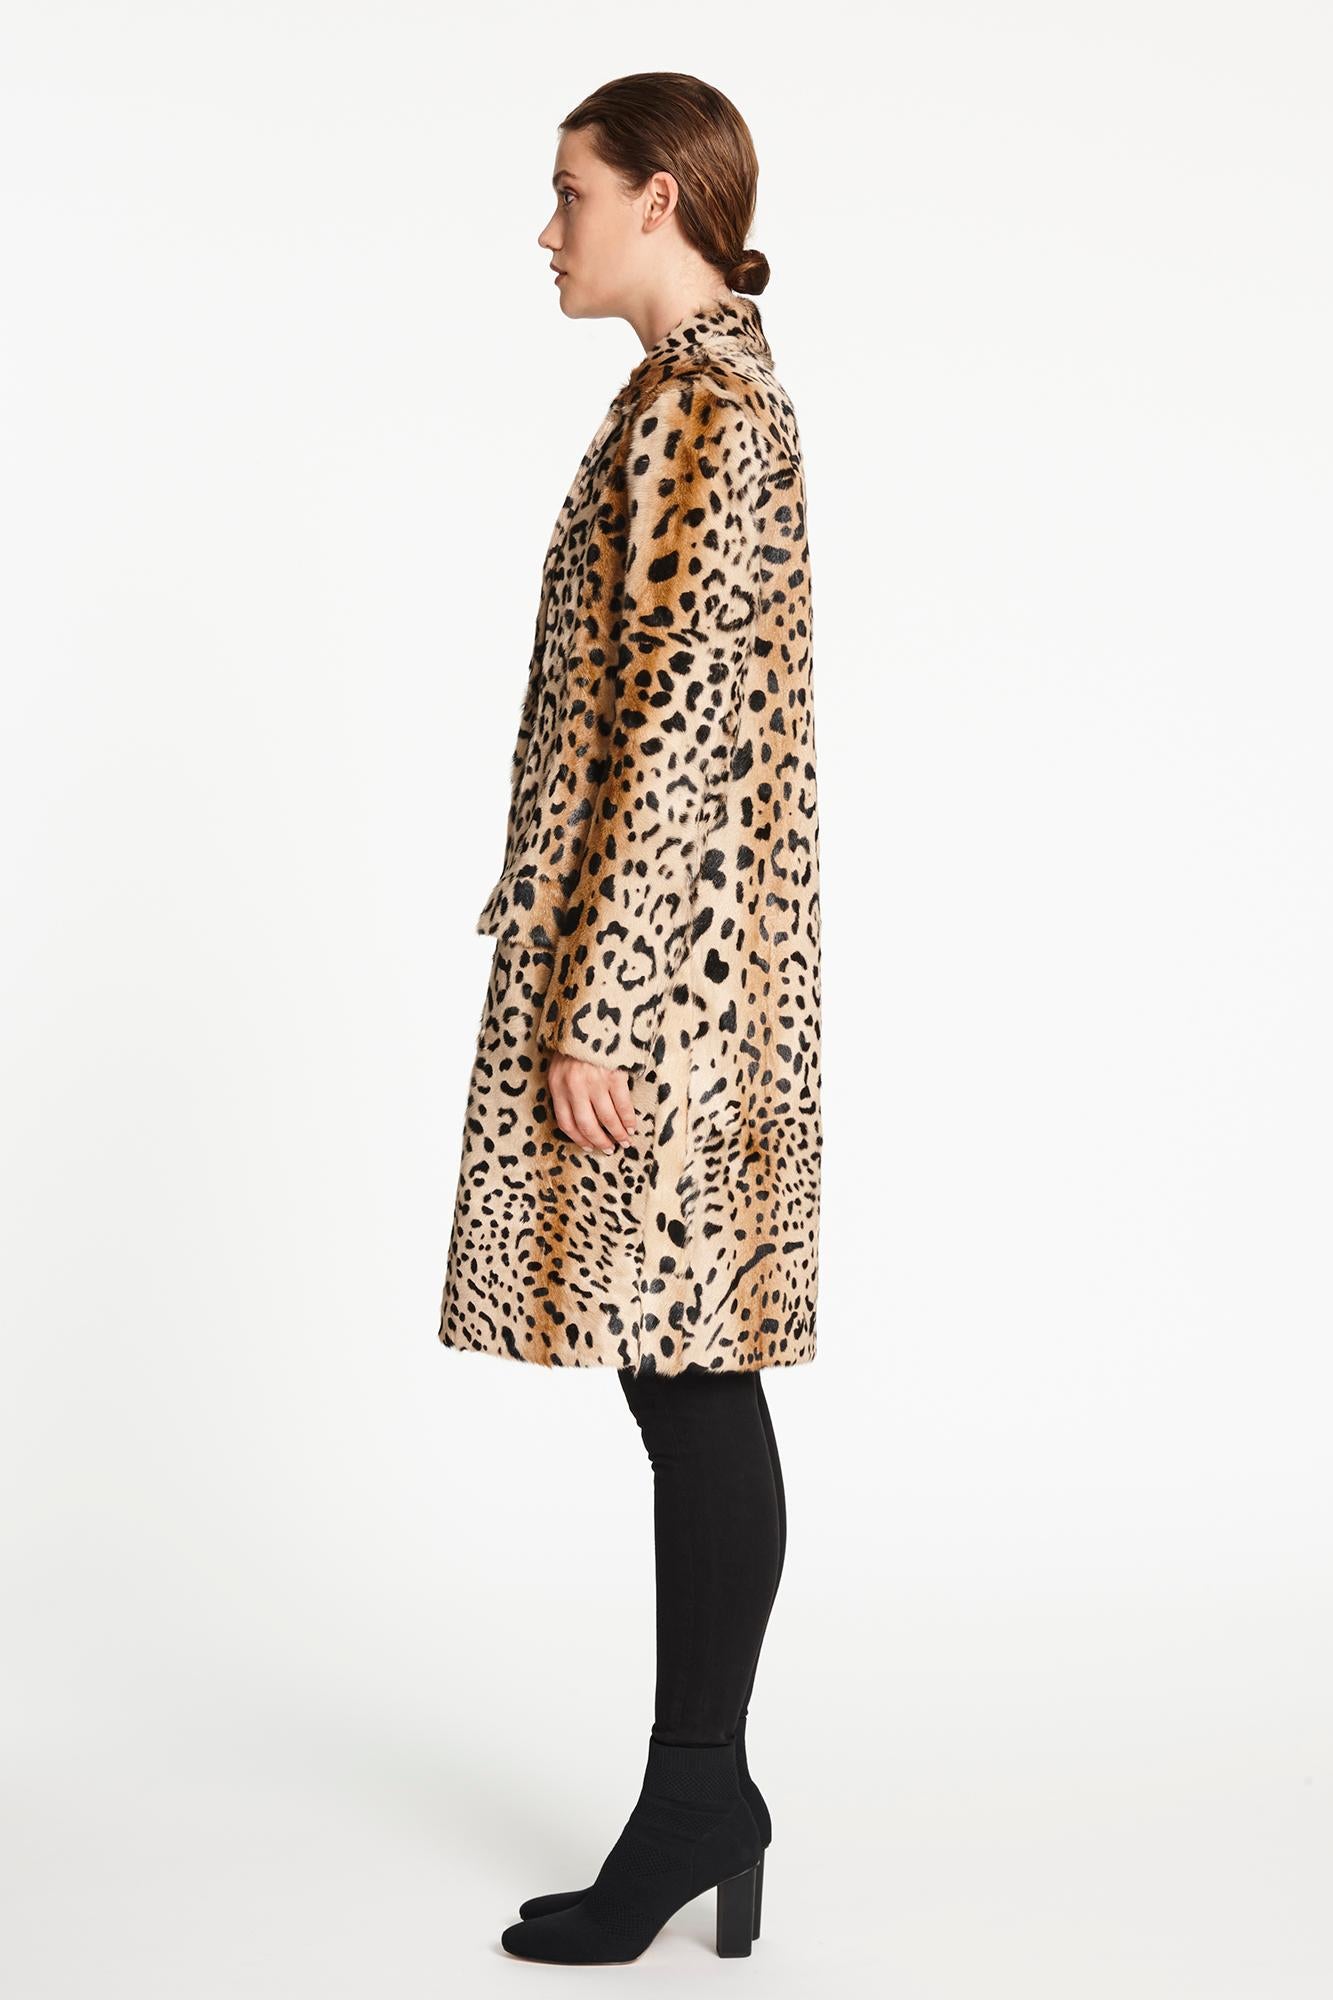 Verheyen London Leopard Print Coat in Red Ruby Goat Hair Fur UK 10 - Brand New  5